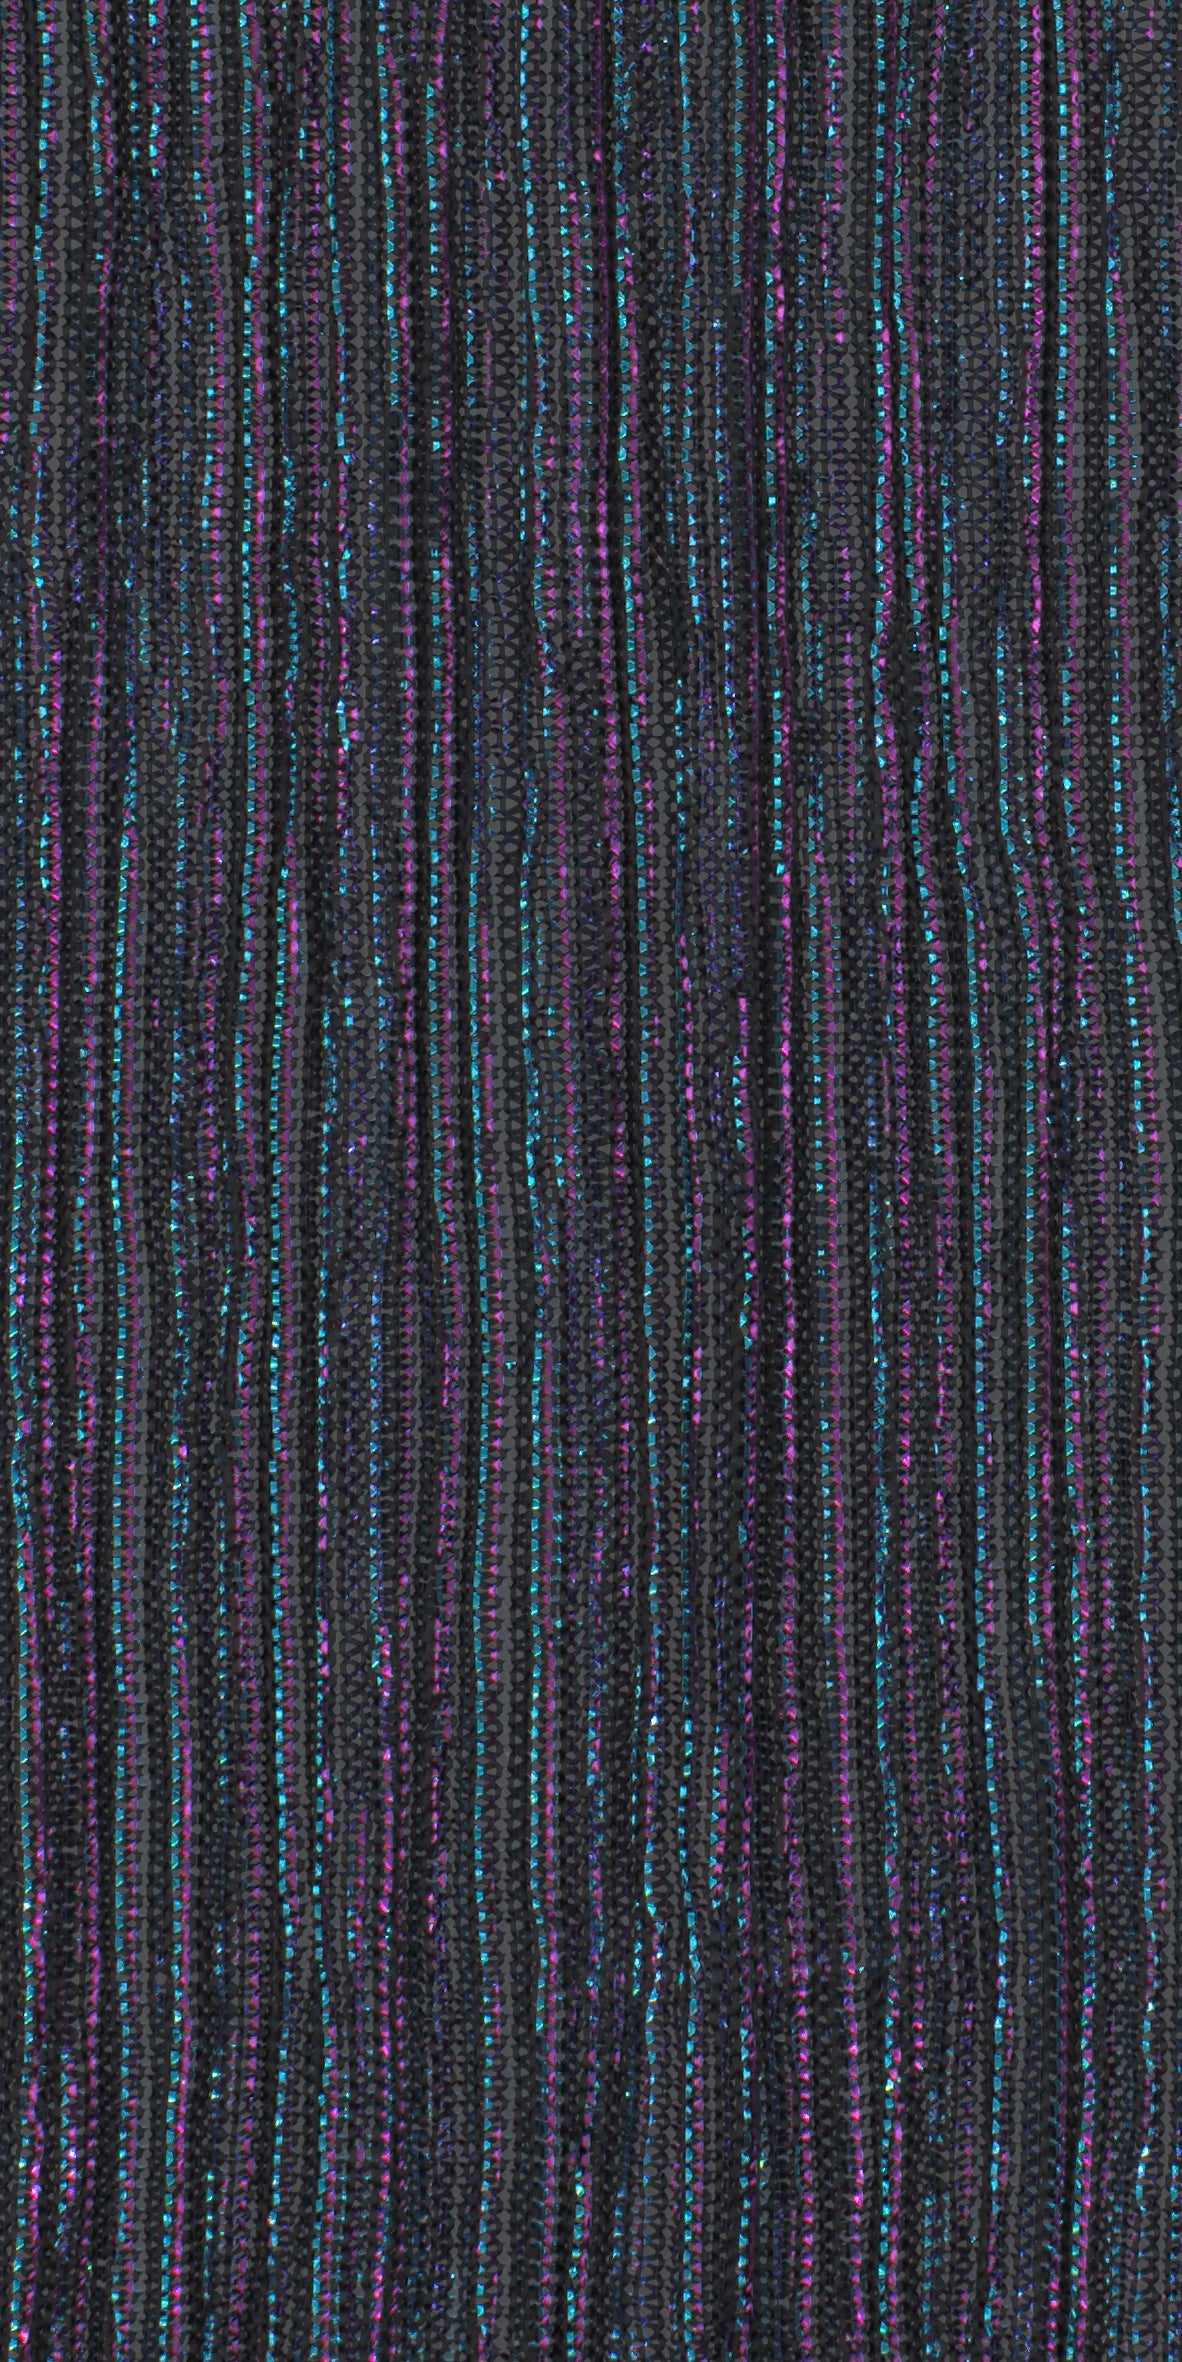 12006-25 Blue Purple Light Blue Metallic Pleat Plain Dyed Blend 126g/yd 56" blend blue knit metallic plain dyed pleat ppl new purple Metallic, Pleat - knit fabric - woven fabric - fabric company - fabric wholesale - fabric b2b - fabric factory - high quality fabric - hong kong fabric - fabric hk - acetate fabric - cotton fabric - linen fabric - metallic fabric - nylon fabric - polyester fabric - spandex fabric - chun wing hing - cwh hk - fabric worldwide ship - 針織布 - 梳織布 - 布料公司- 布料批發 - 香港布料 - 秦榮興